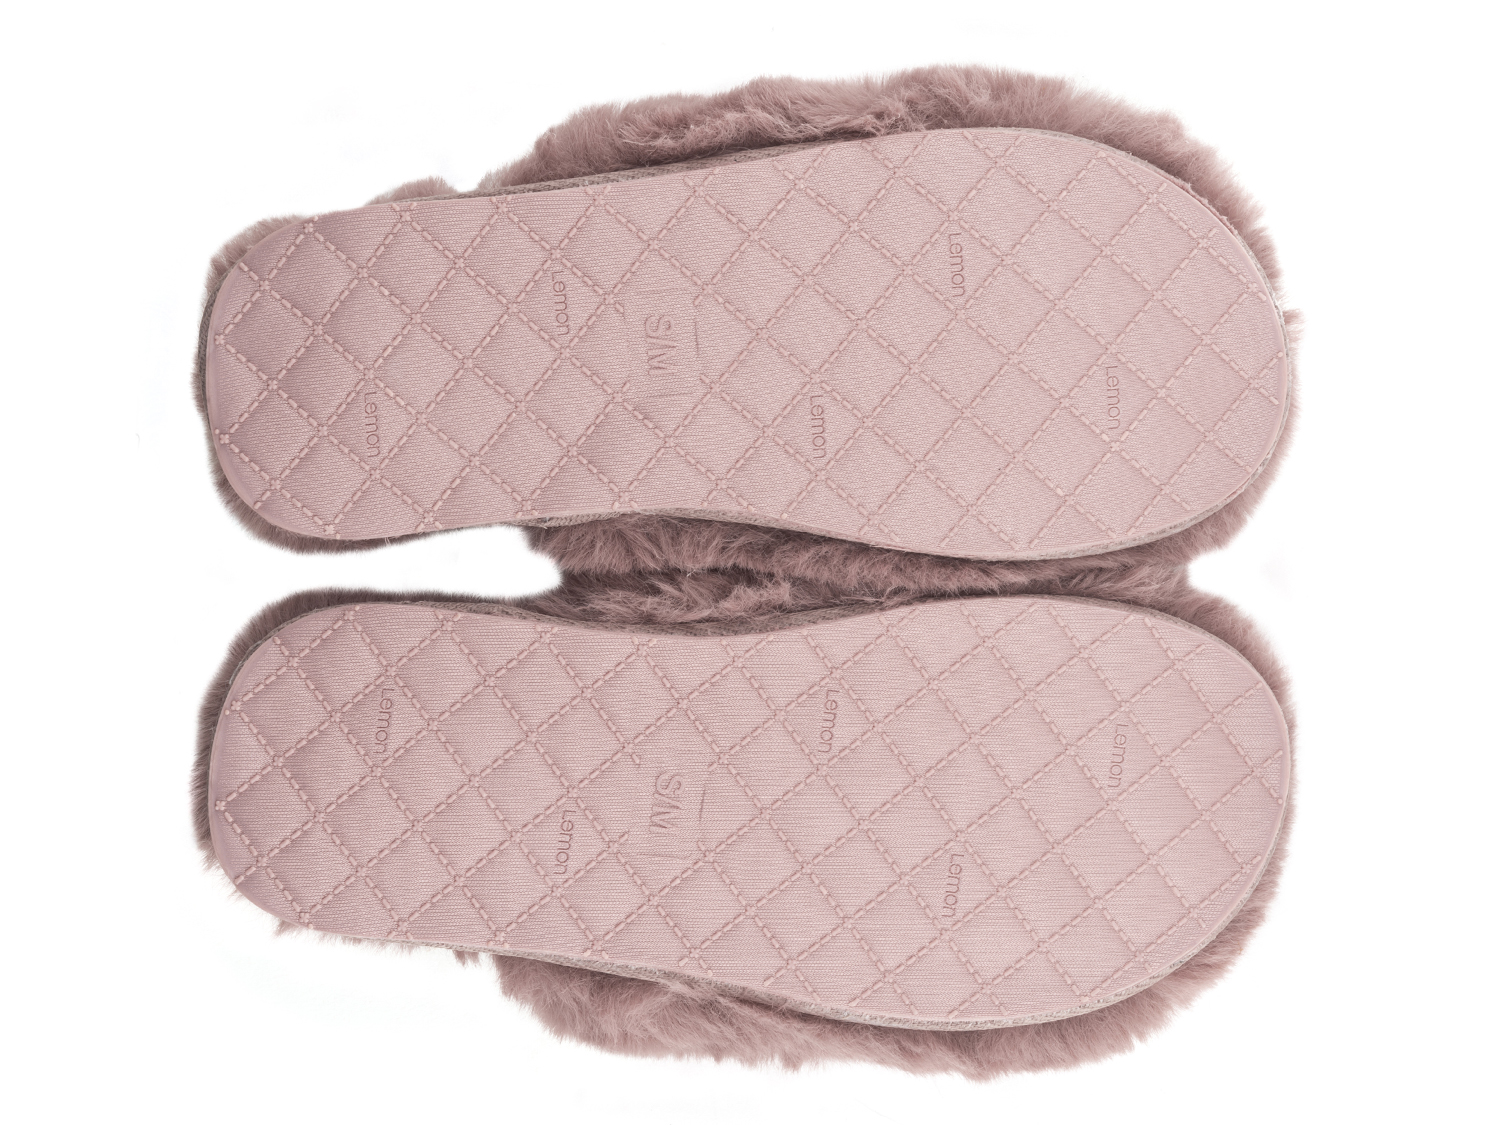 Lemon Women's Faux-Fur Slide Spa Slippers L/xl 9/10 Pink Stay home Comfortable 